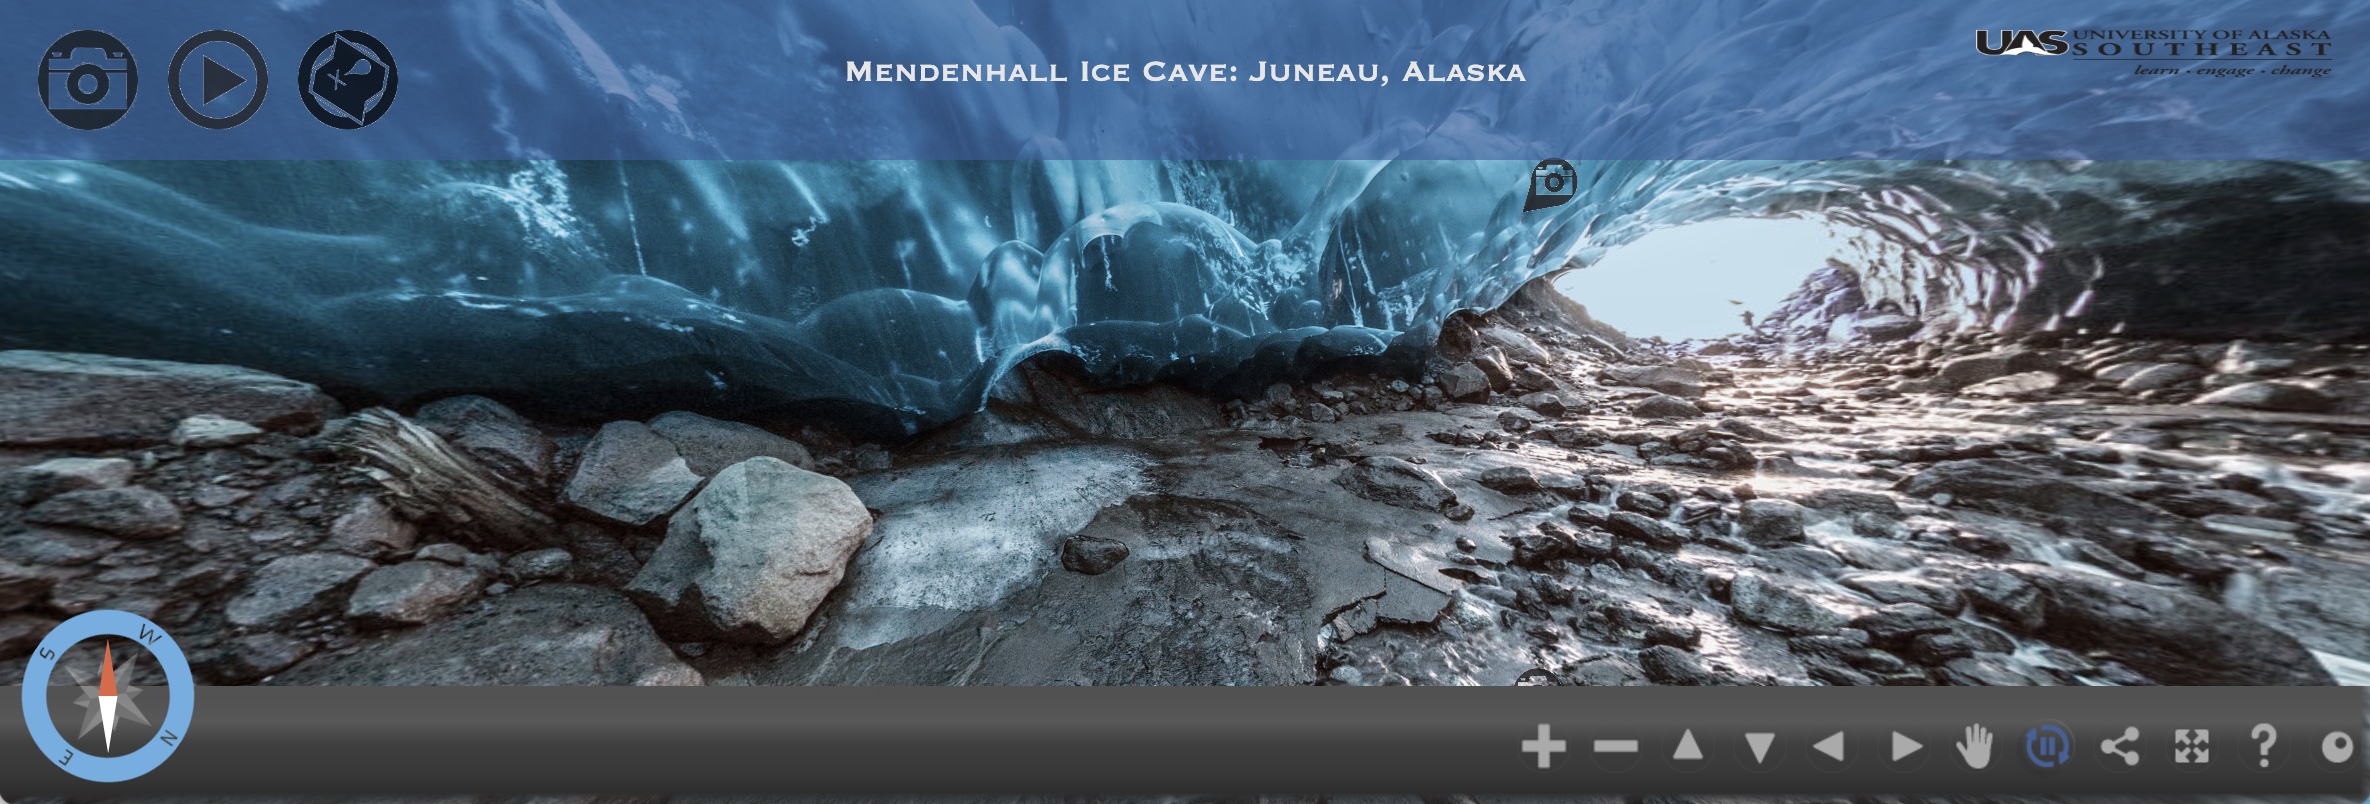 Mendenhall Ice Cave tour.